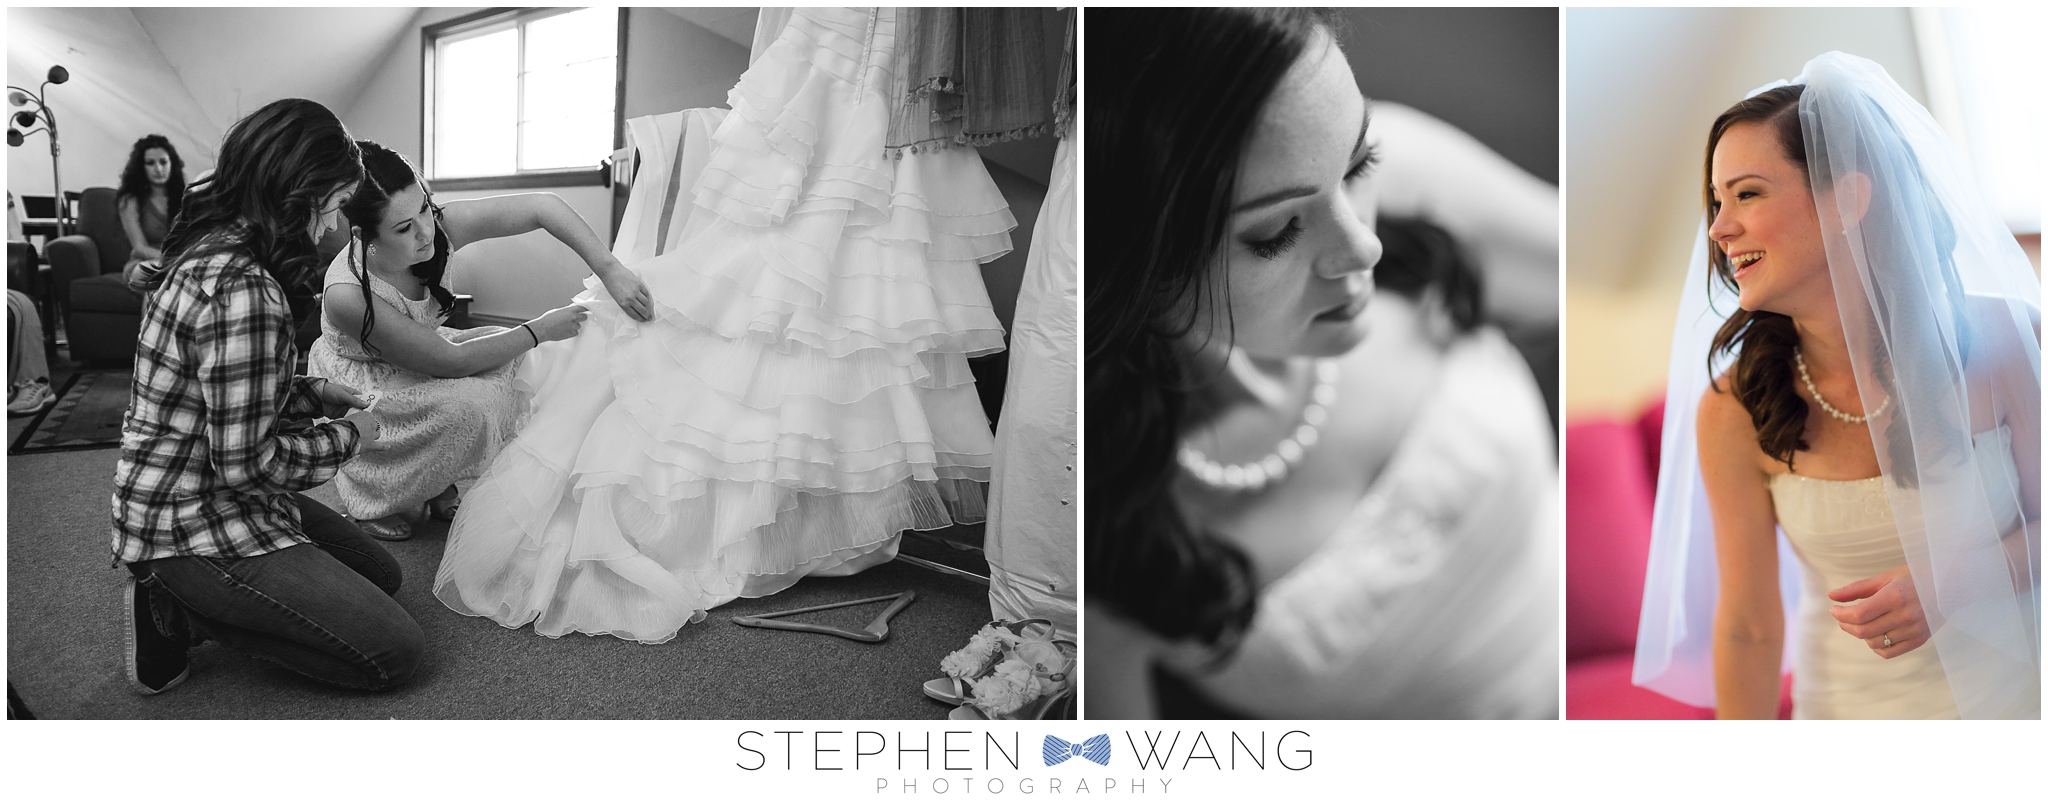 Stephen Wang Photography wedding connecticut deep river lace factory wedding photography connecticut photographer-01-22_0005.jpg